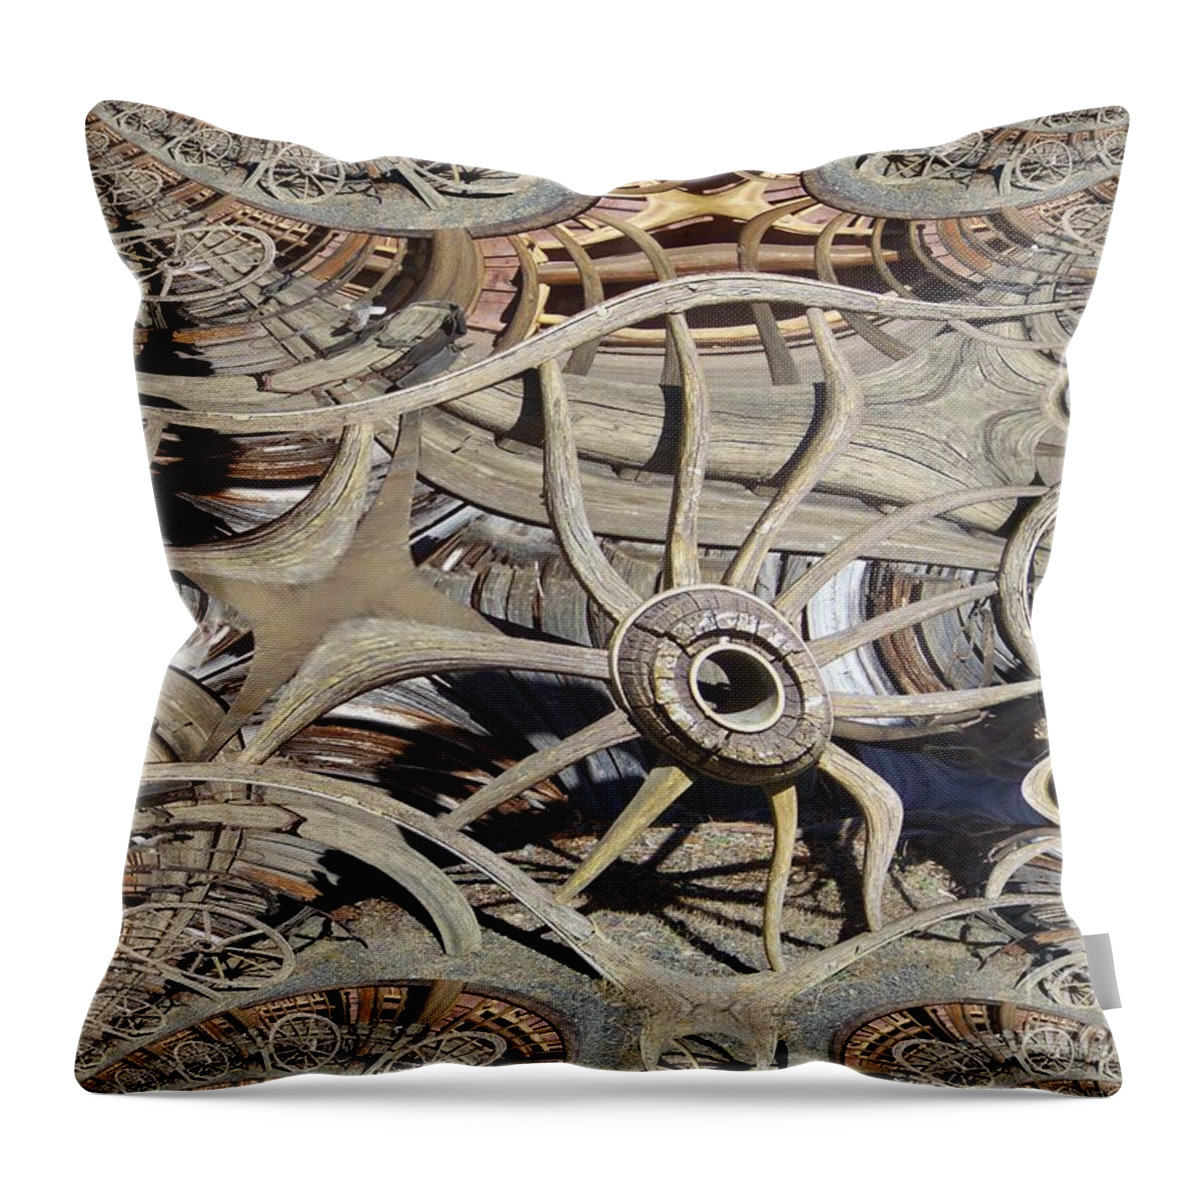 Wagon Wheel Throw Pillow featuring the digital art Wagon Wheel Fractal by Charles Robinson